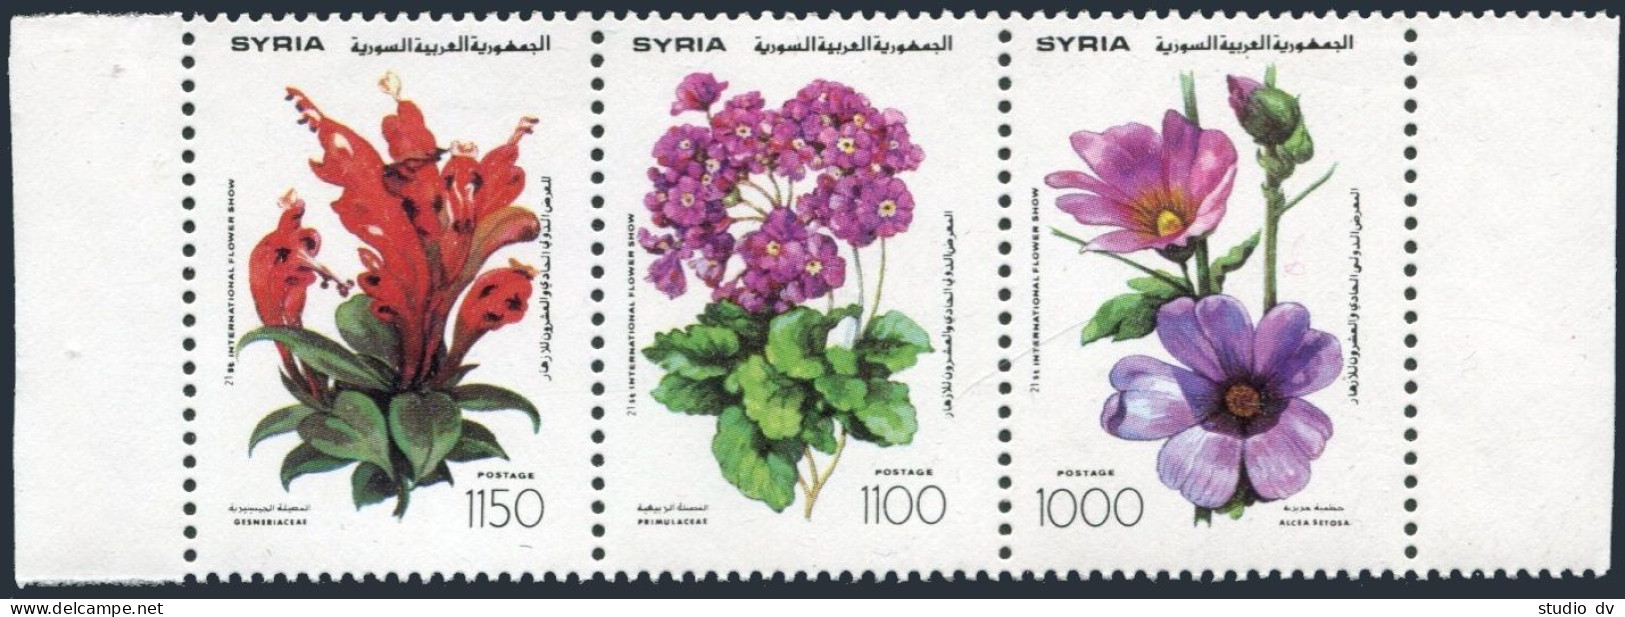 Syria 1295 Ac Strip,MNH.Michel 1889-1891. Flower Show,Damascus,1993. - Syria